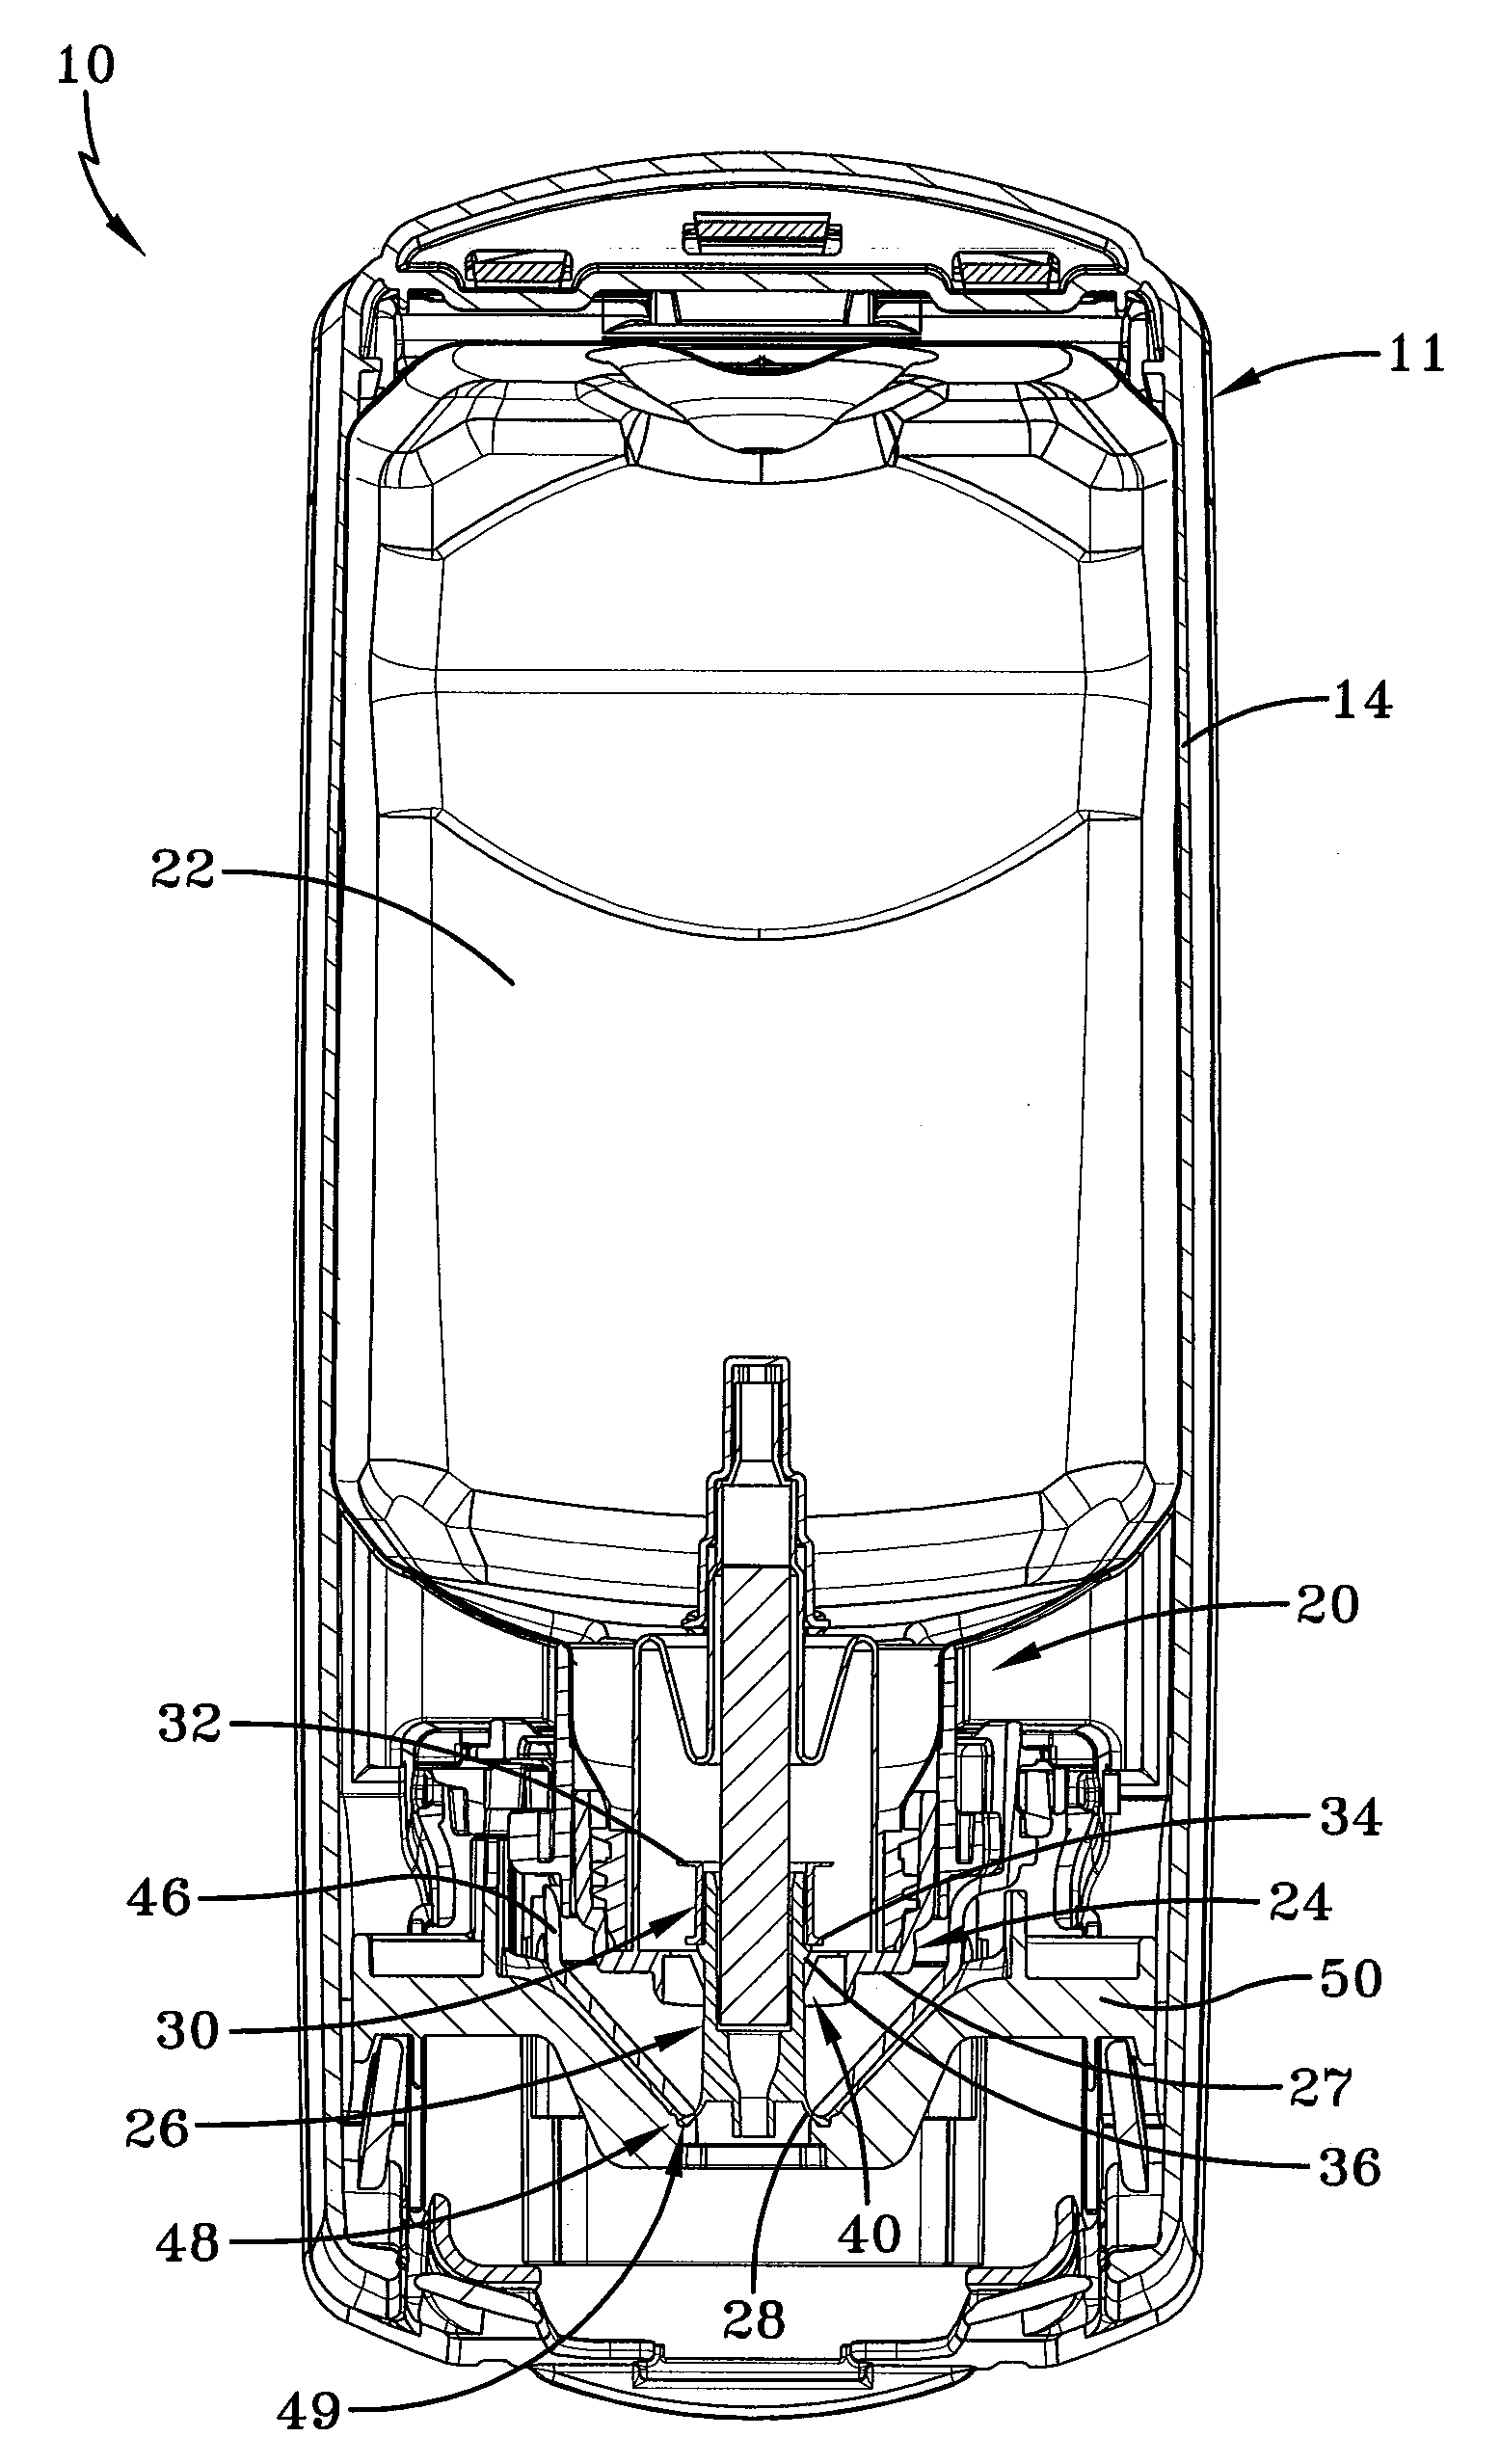 Pump having a flexible mechanism for engagement with a dispenser